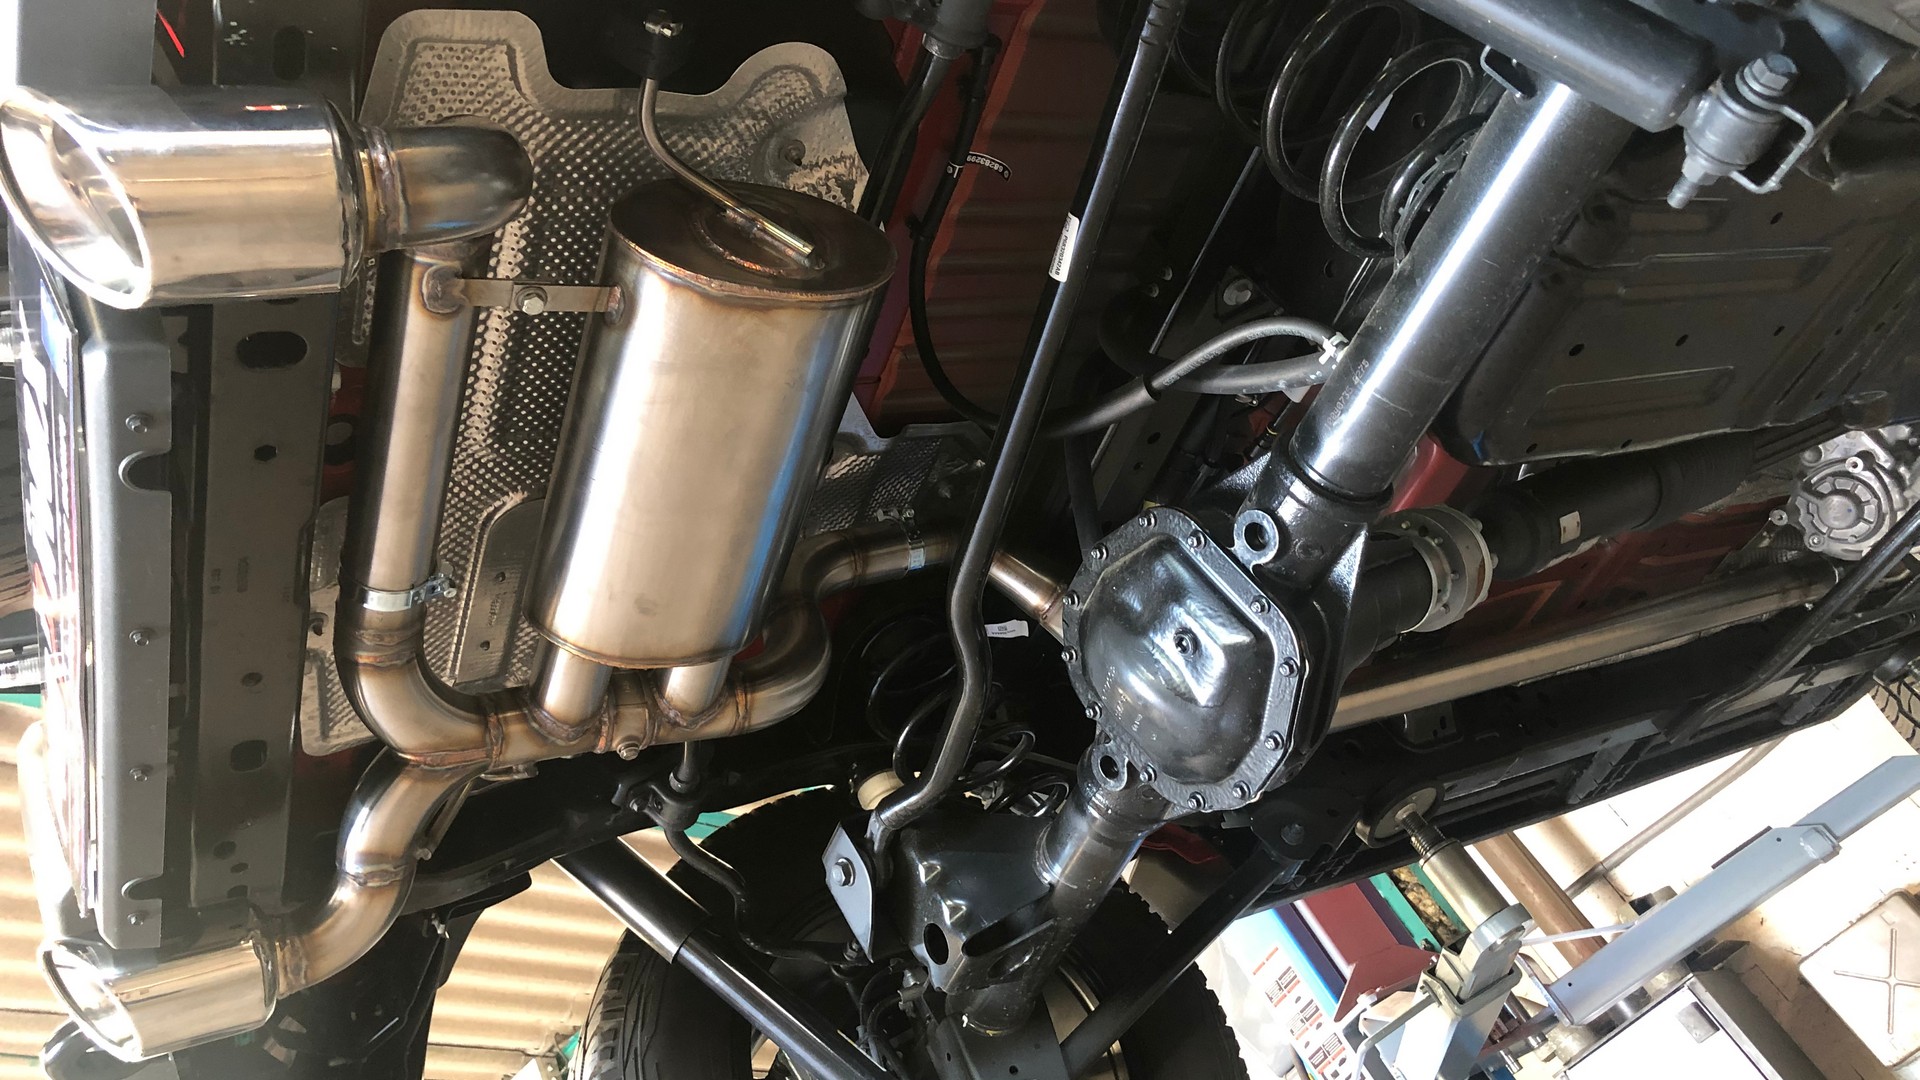 Échappement inox Jeep Wrangler 2L Turbo 2019